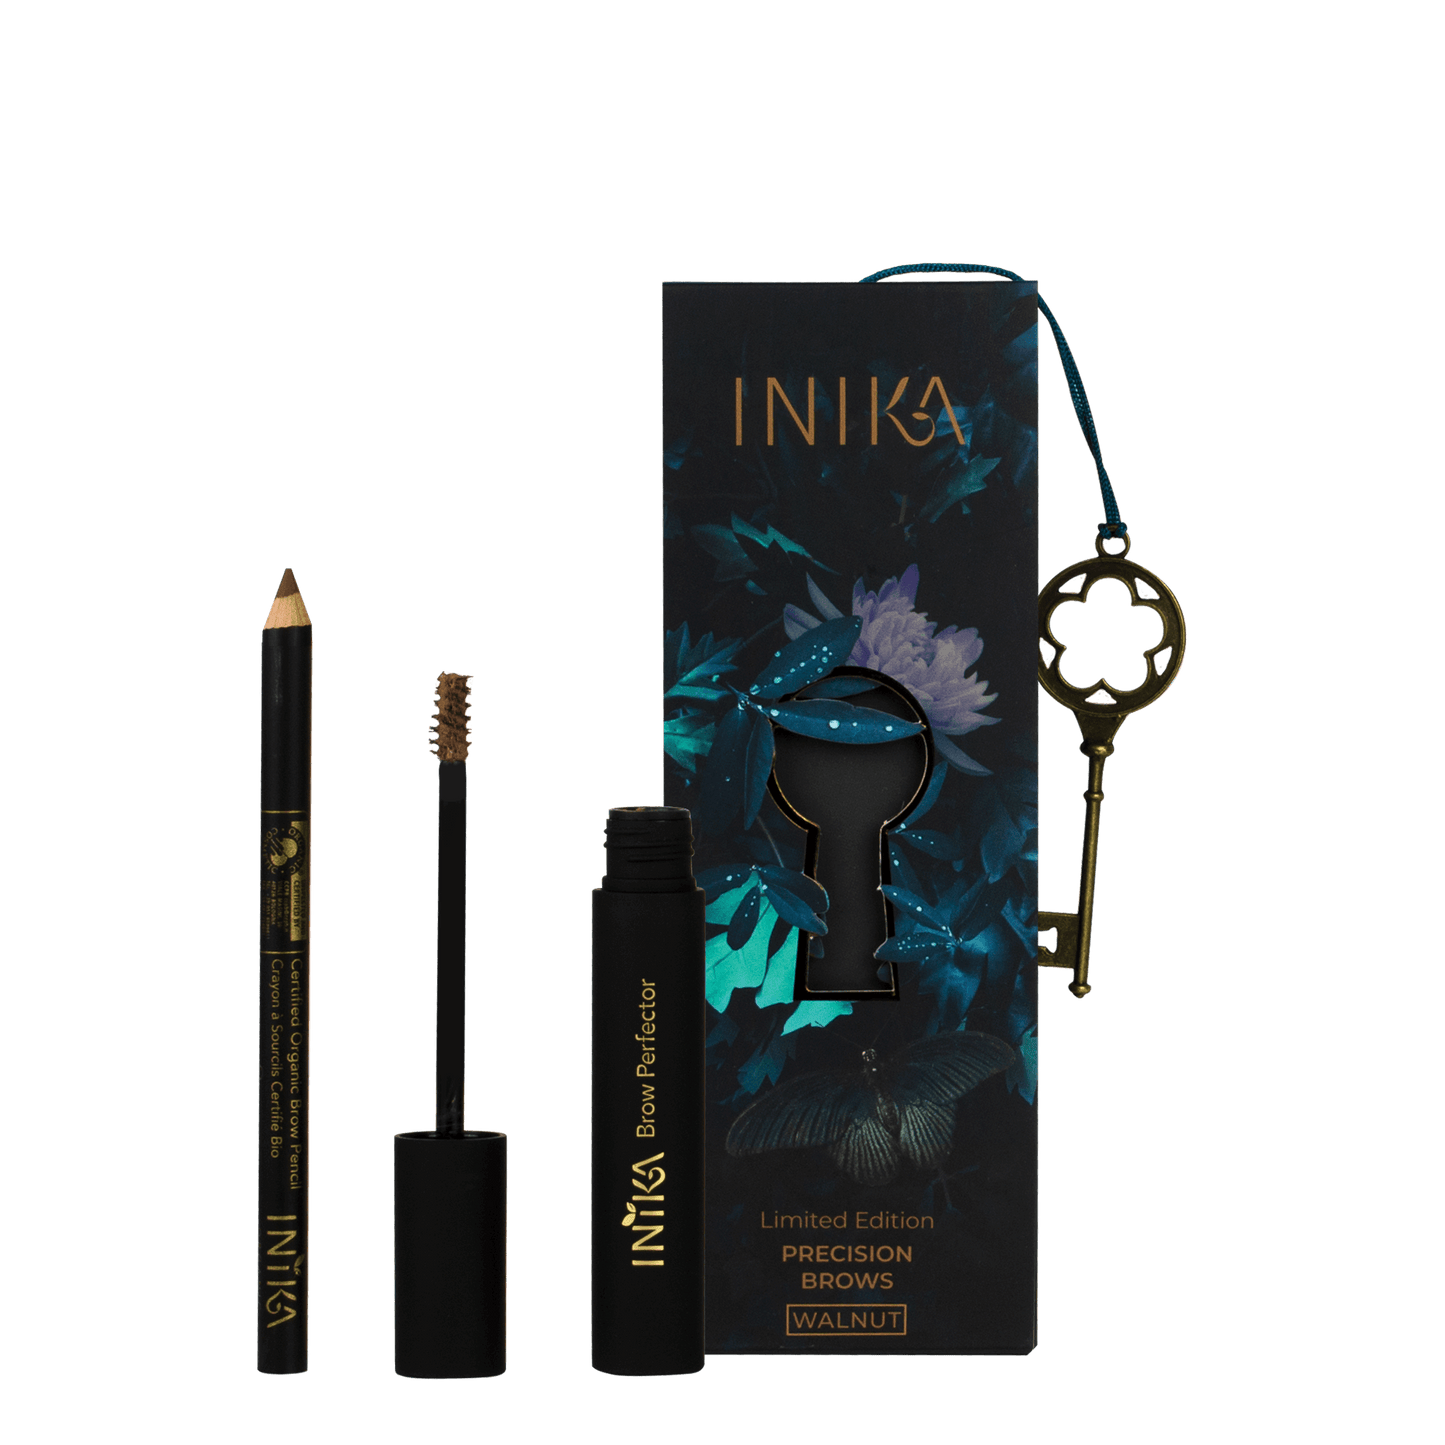 Limited Edition Precision Brows (Walnut) INIKA Organic